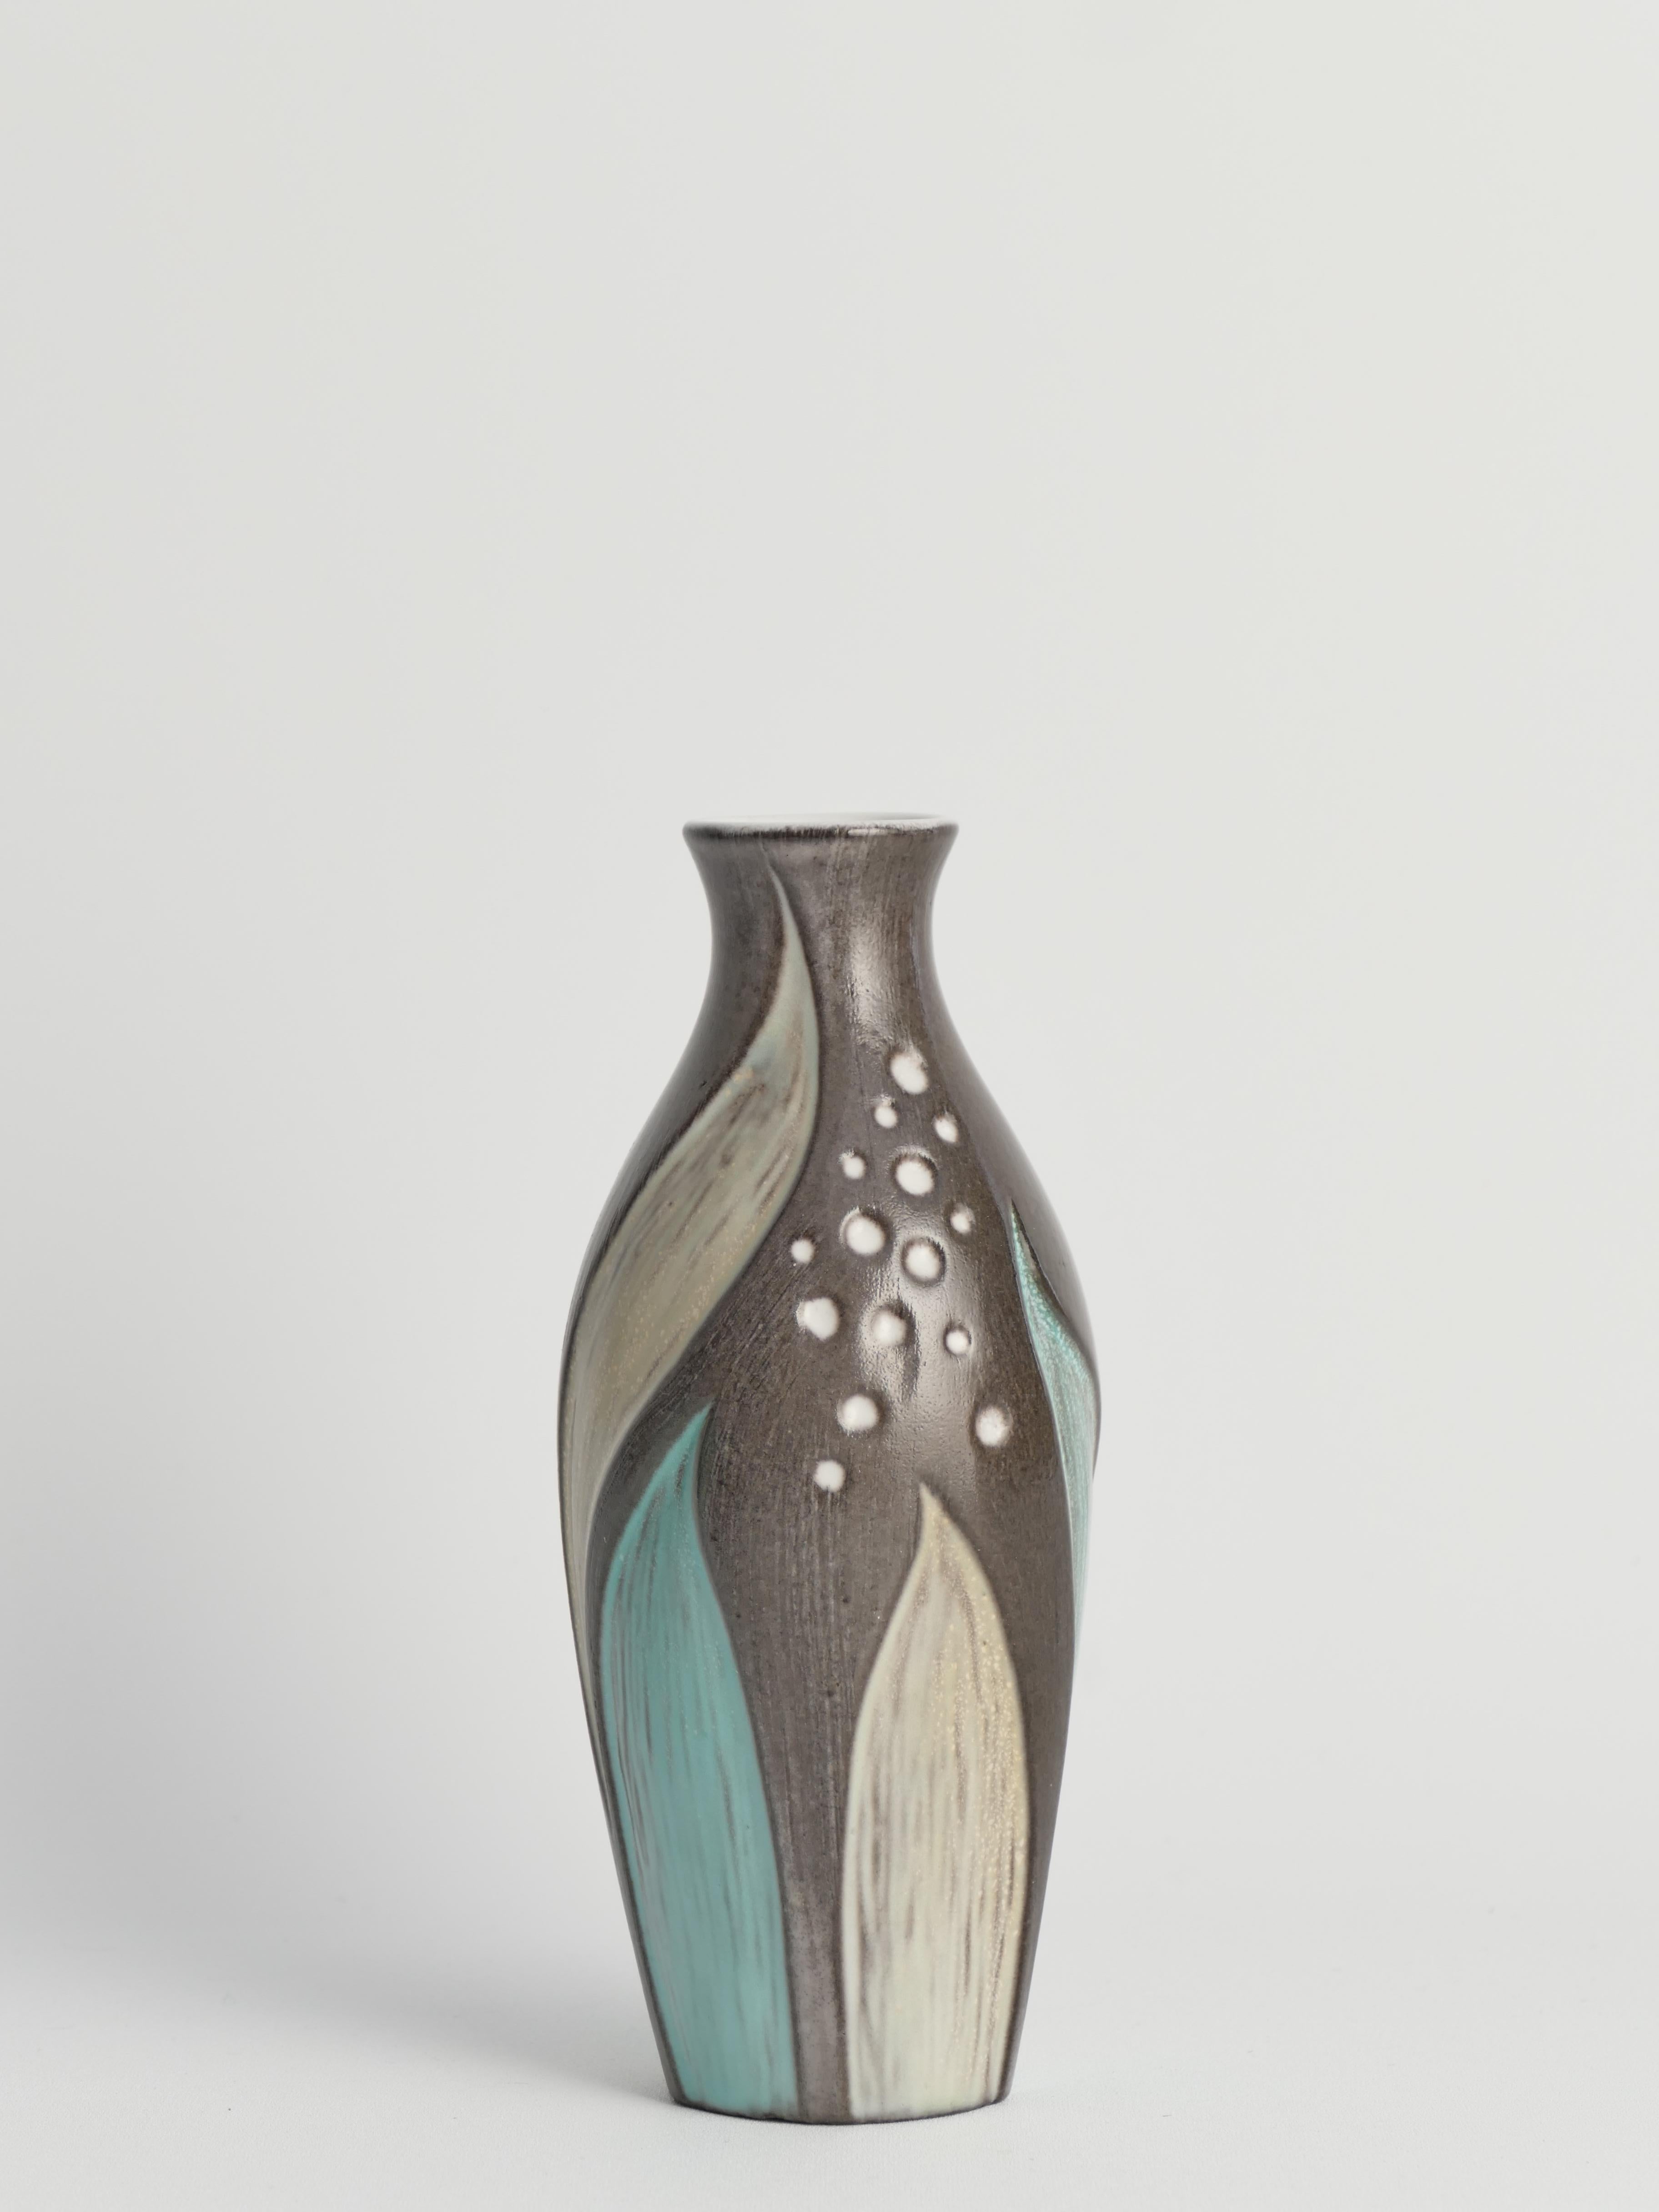 Scandinavian Modern Ceramic Vase with Seaweed Motif by Mari Simmulson for Upsala Ekeby, Sweden 1950s For Sale